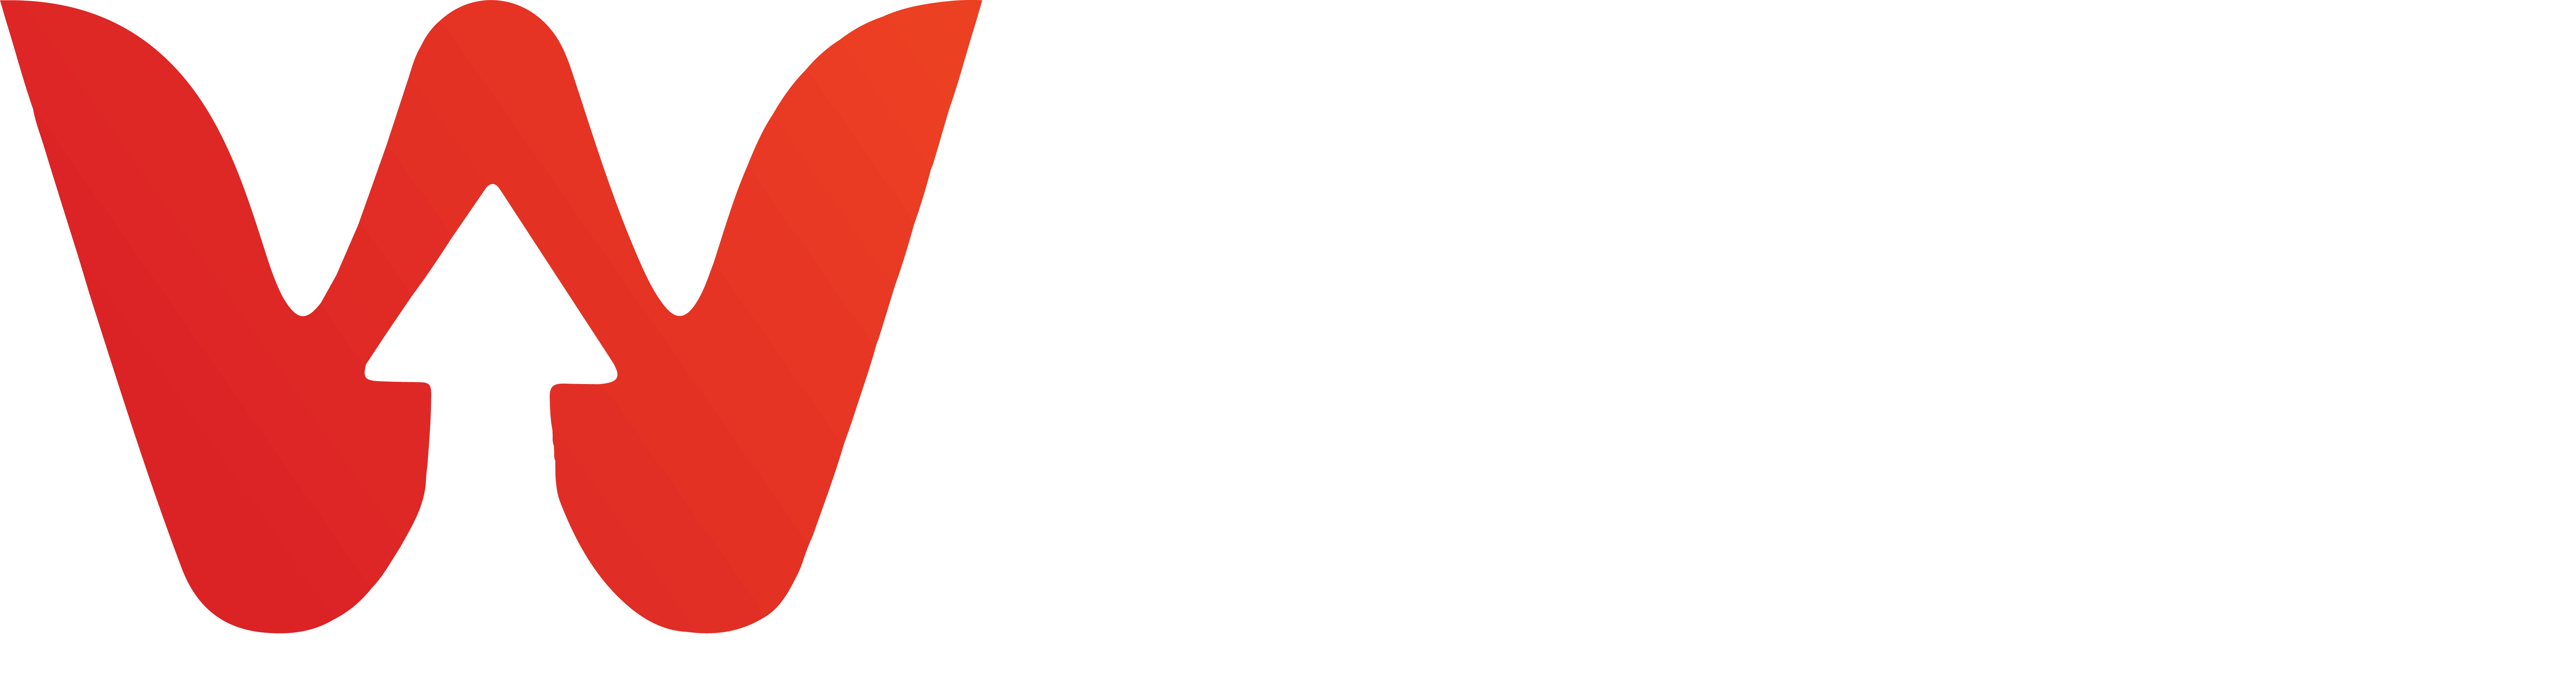 Winners Network Inc